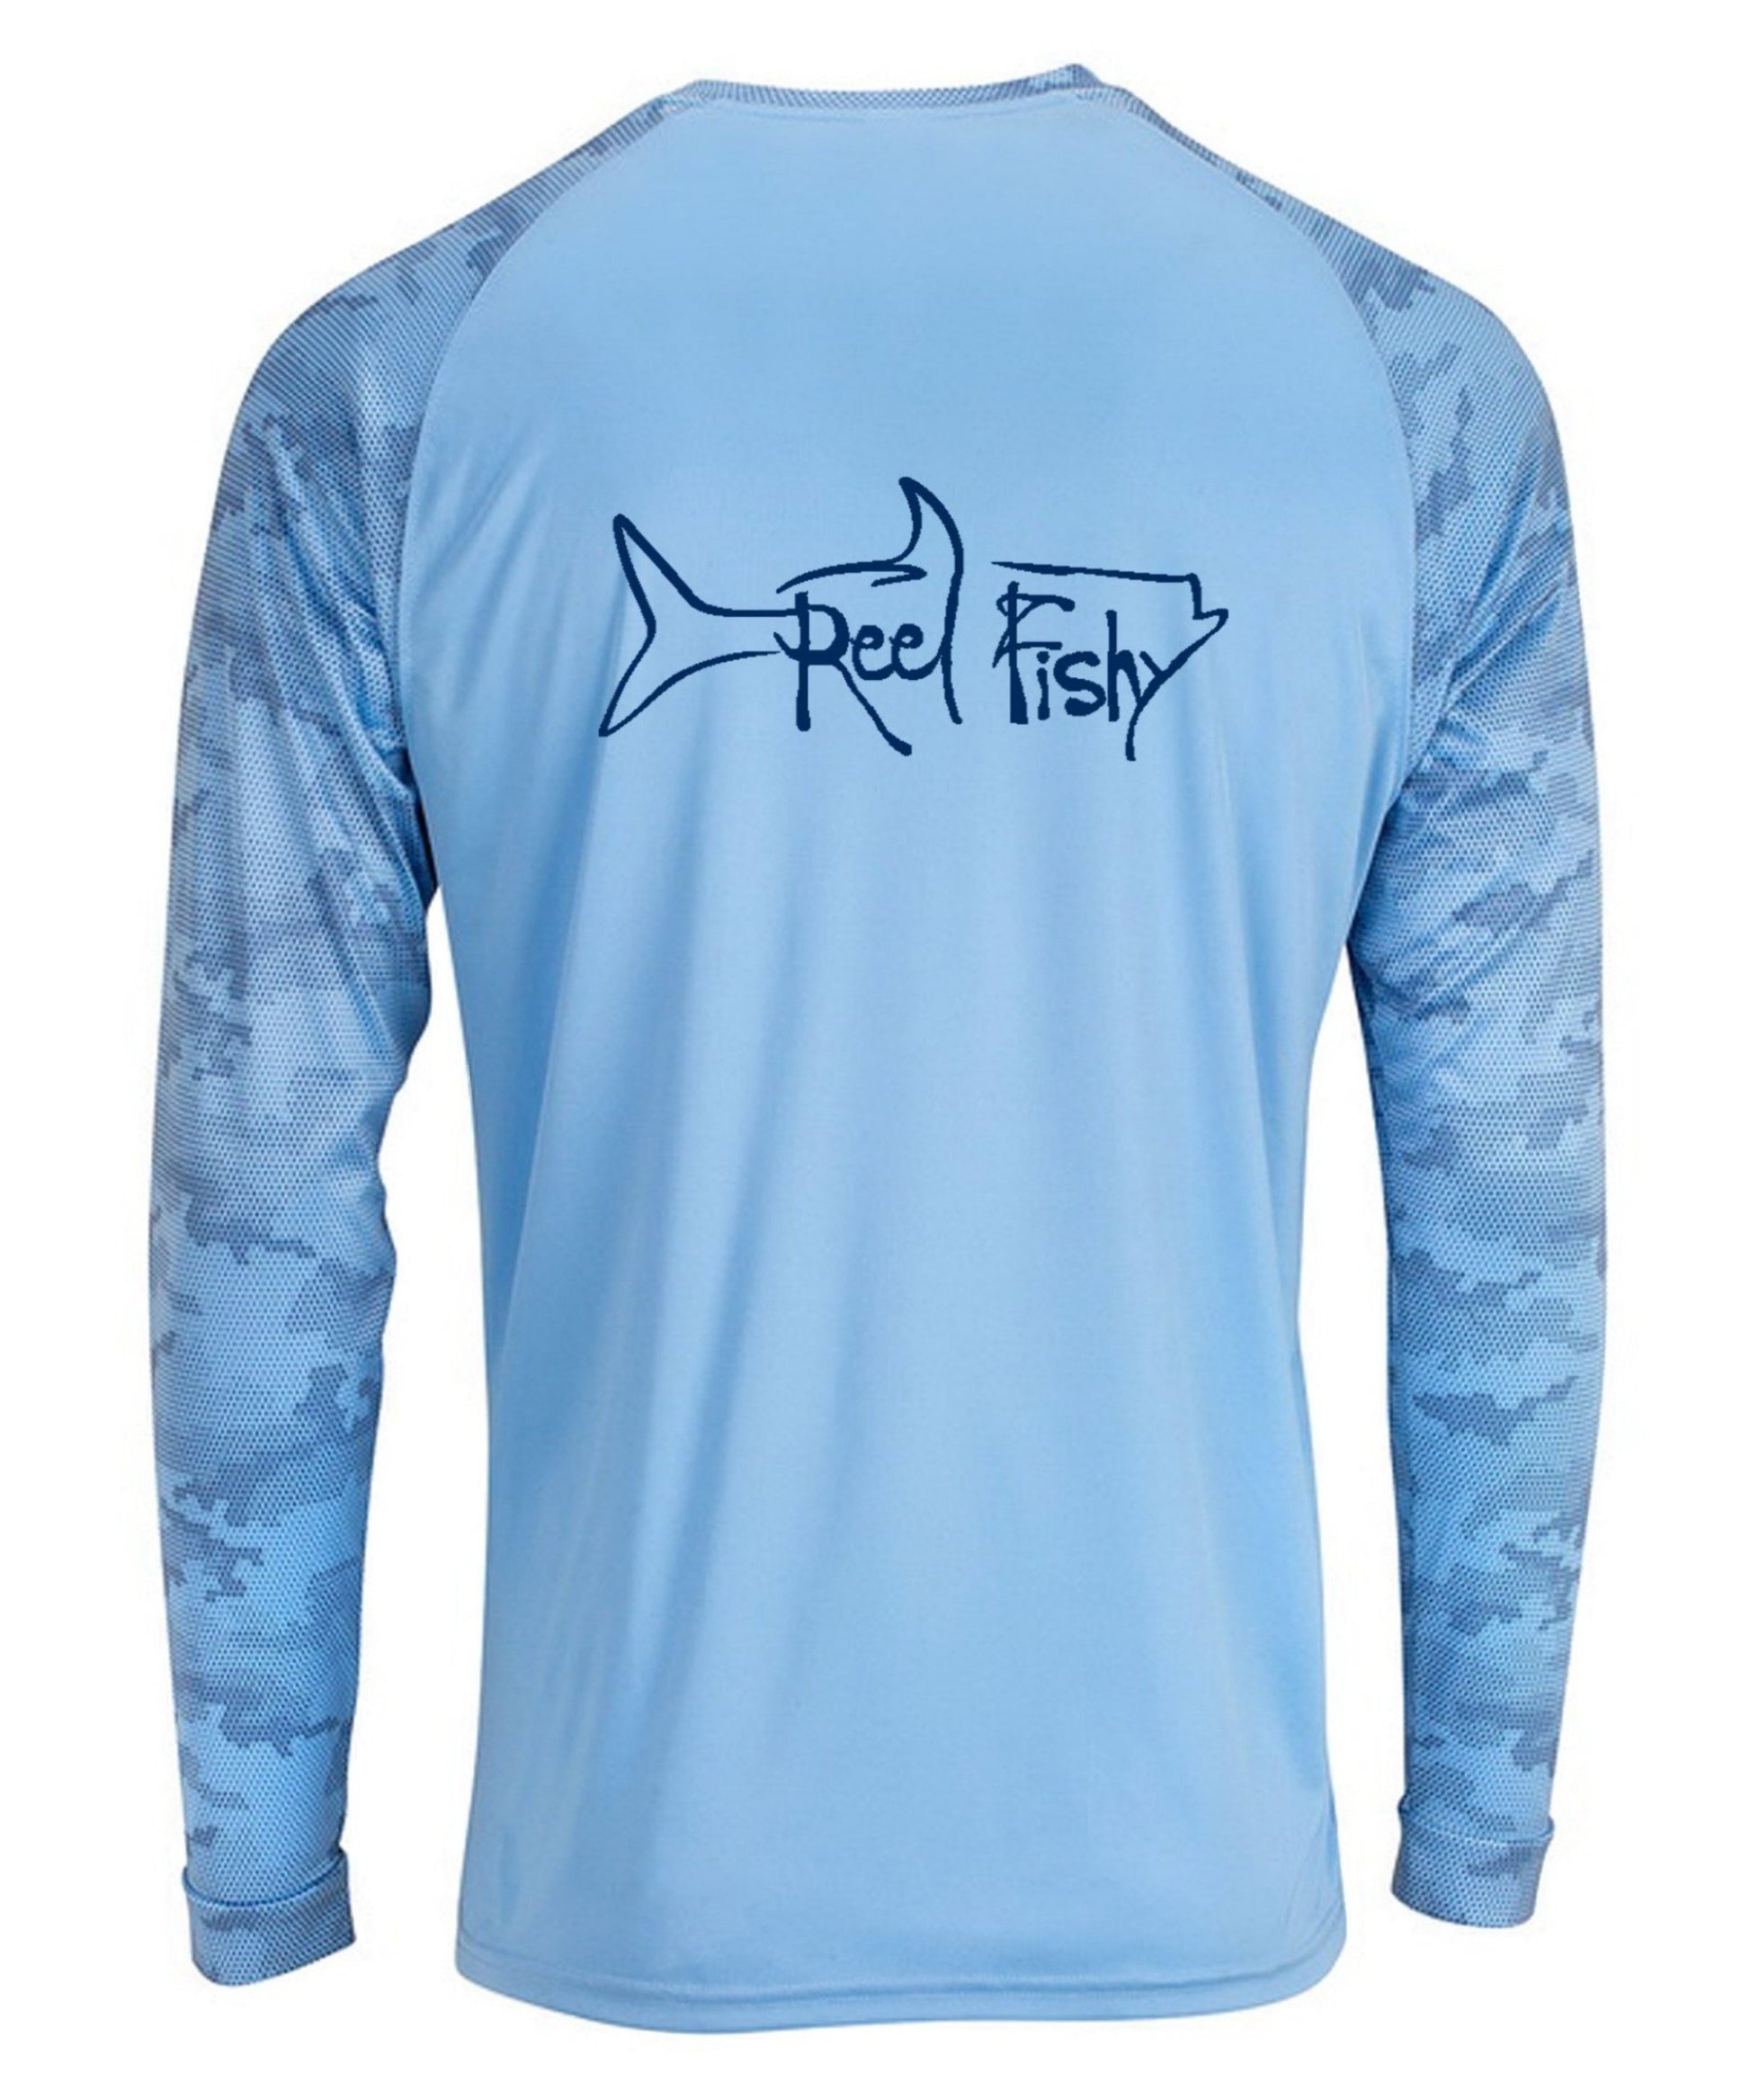 Tarpon Performance Digital Camo 50+uv Fishing Long Sleeve Shirts- Reel Fishy Apparel M / Blue Mist Camo - unisex